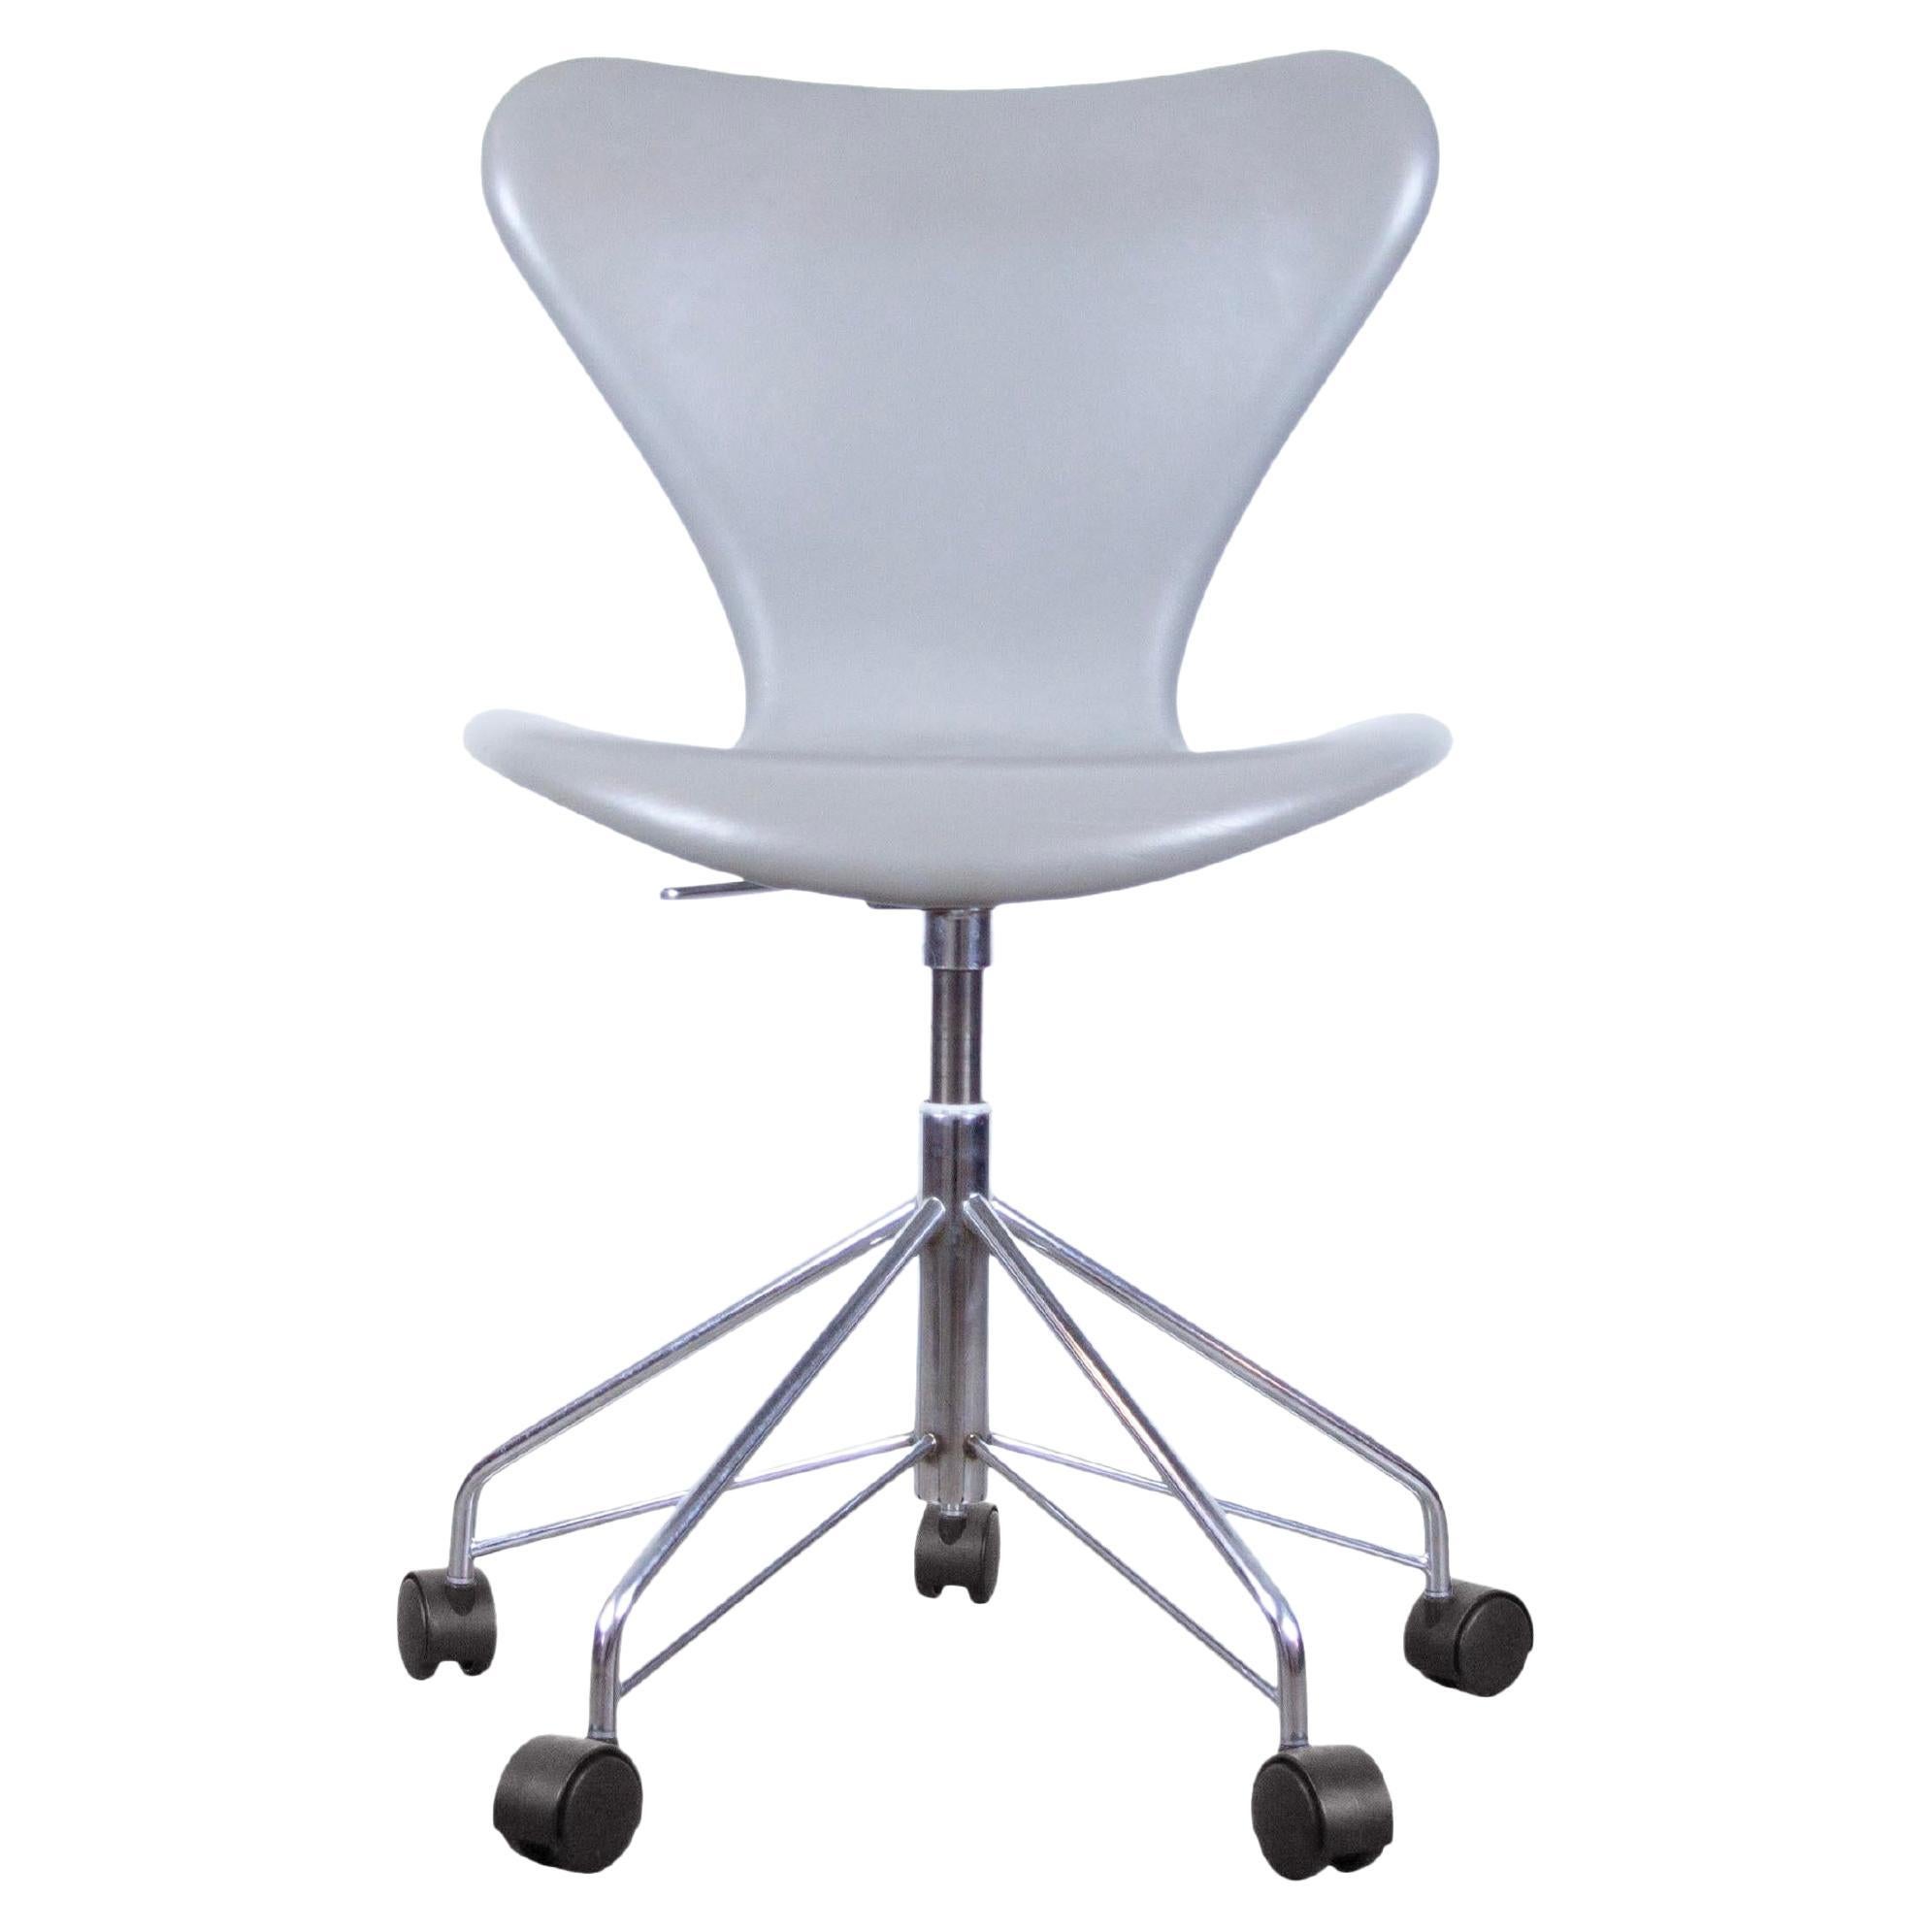 Arne Jacobsen Model 3117 Series 7 Fully Upholstered Desk Chair in Grey Leather